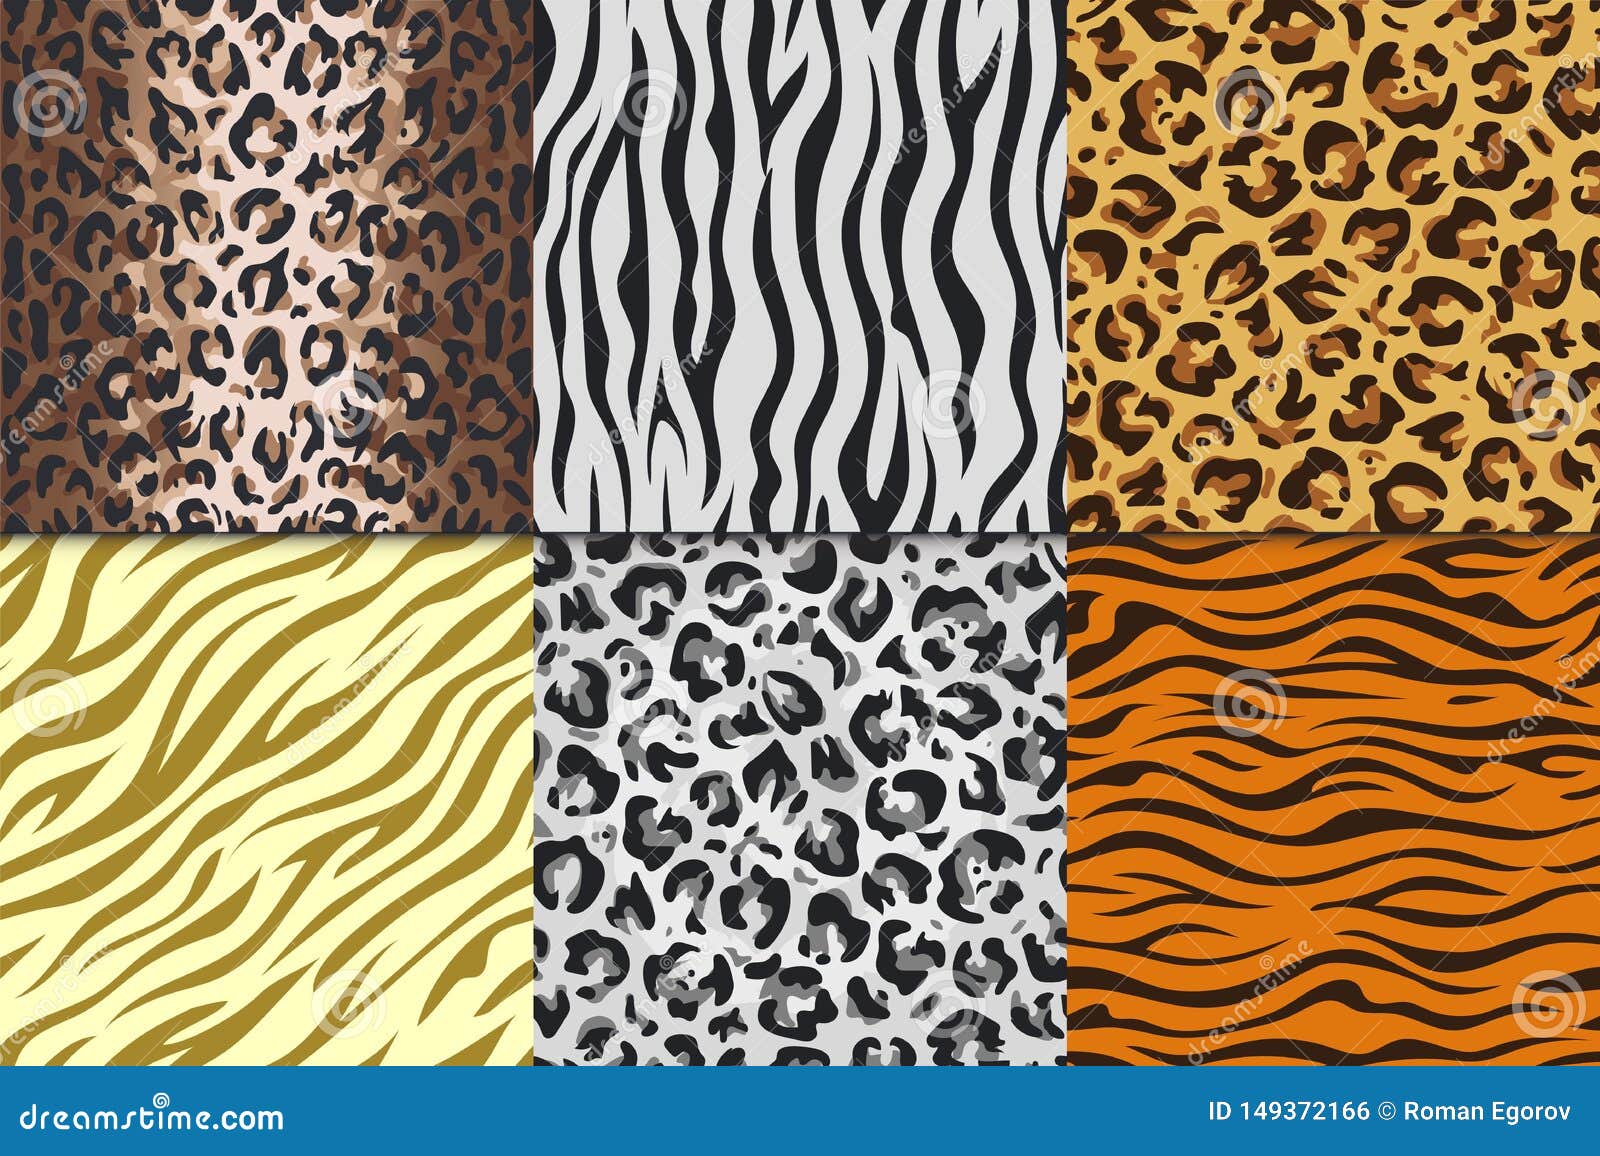 seamless animal prints. leopard tiger zebra skin patterns, texture stripes backgrounds.  africa animals different